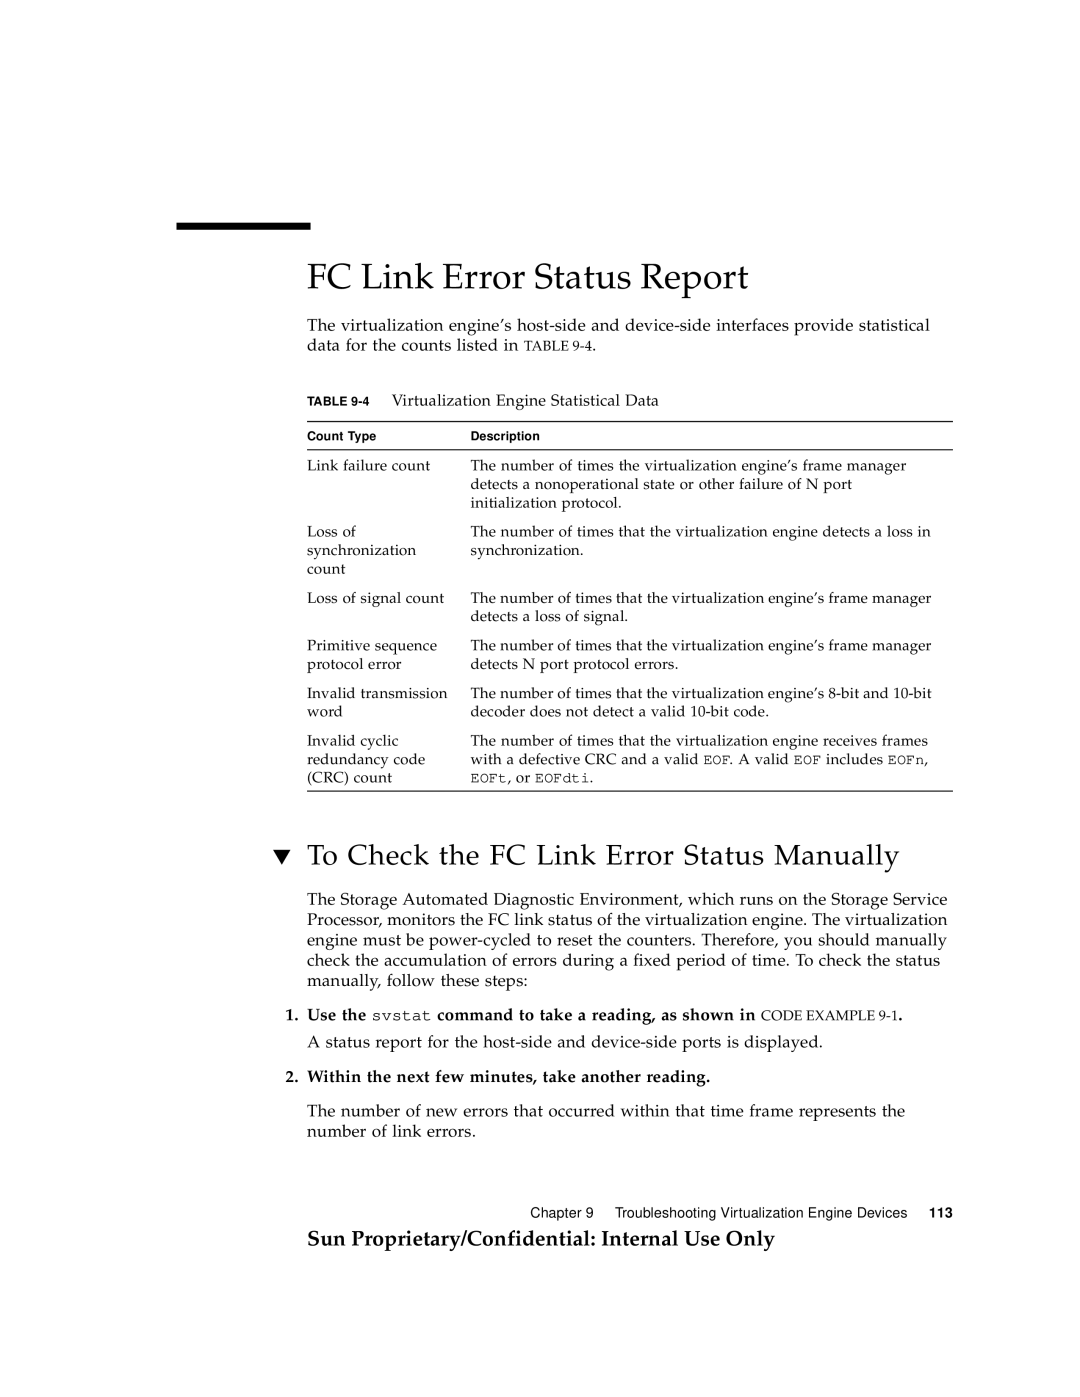 Sun Microsystems 6900, 3900 manual FC Link Error Status Report, To Check the FC Link Error Status Manually 